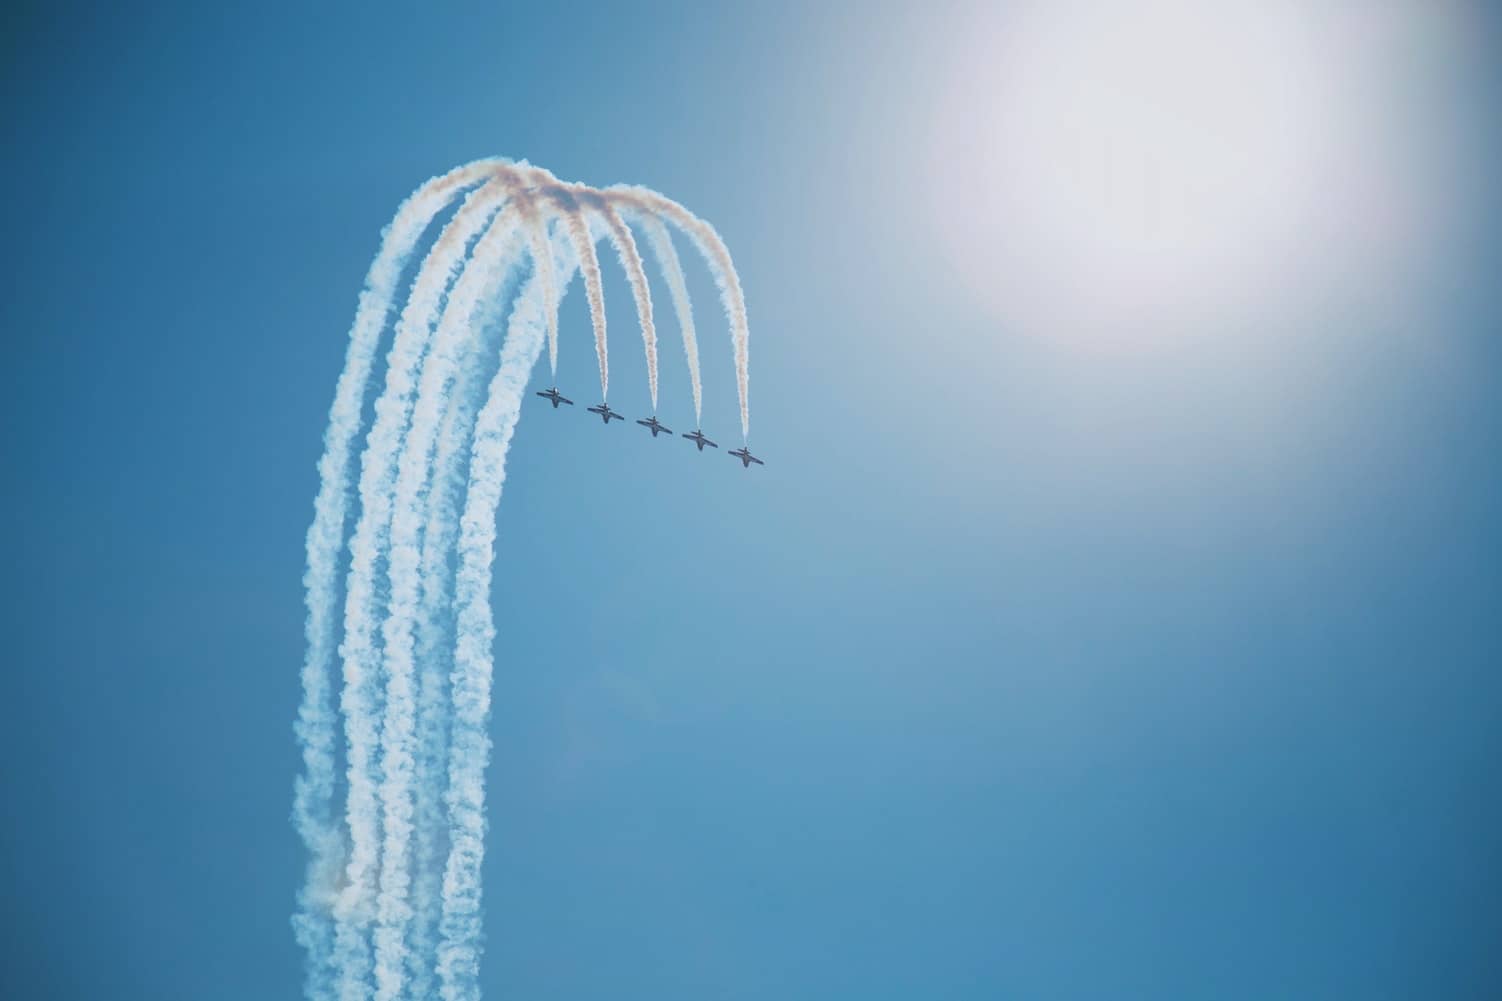 five planes doing aerobatics in the sky by Takahiro Sakamoto